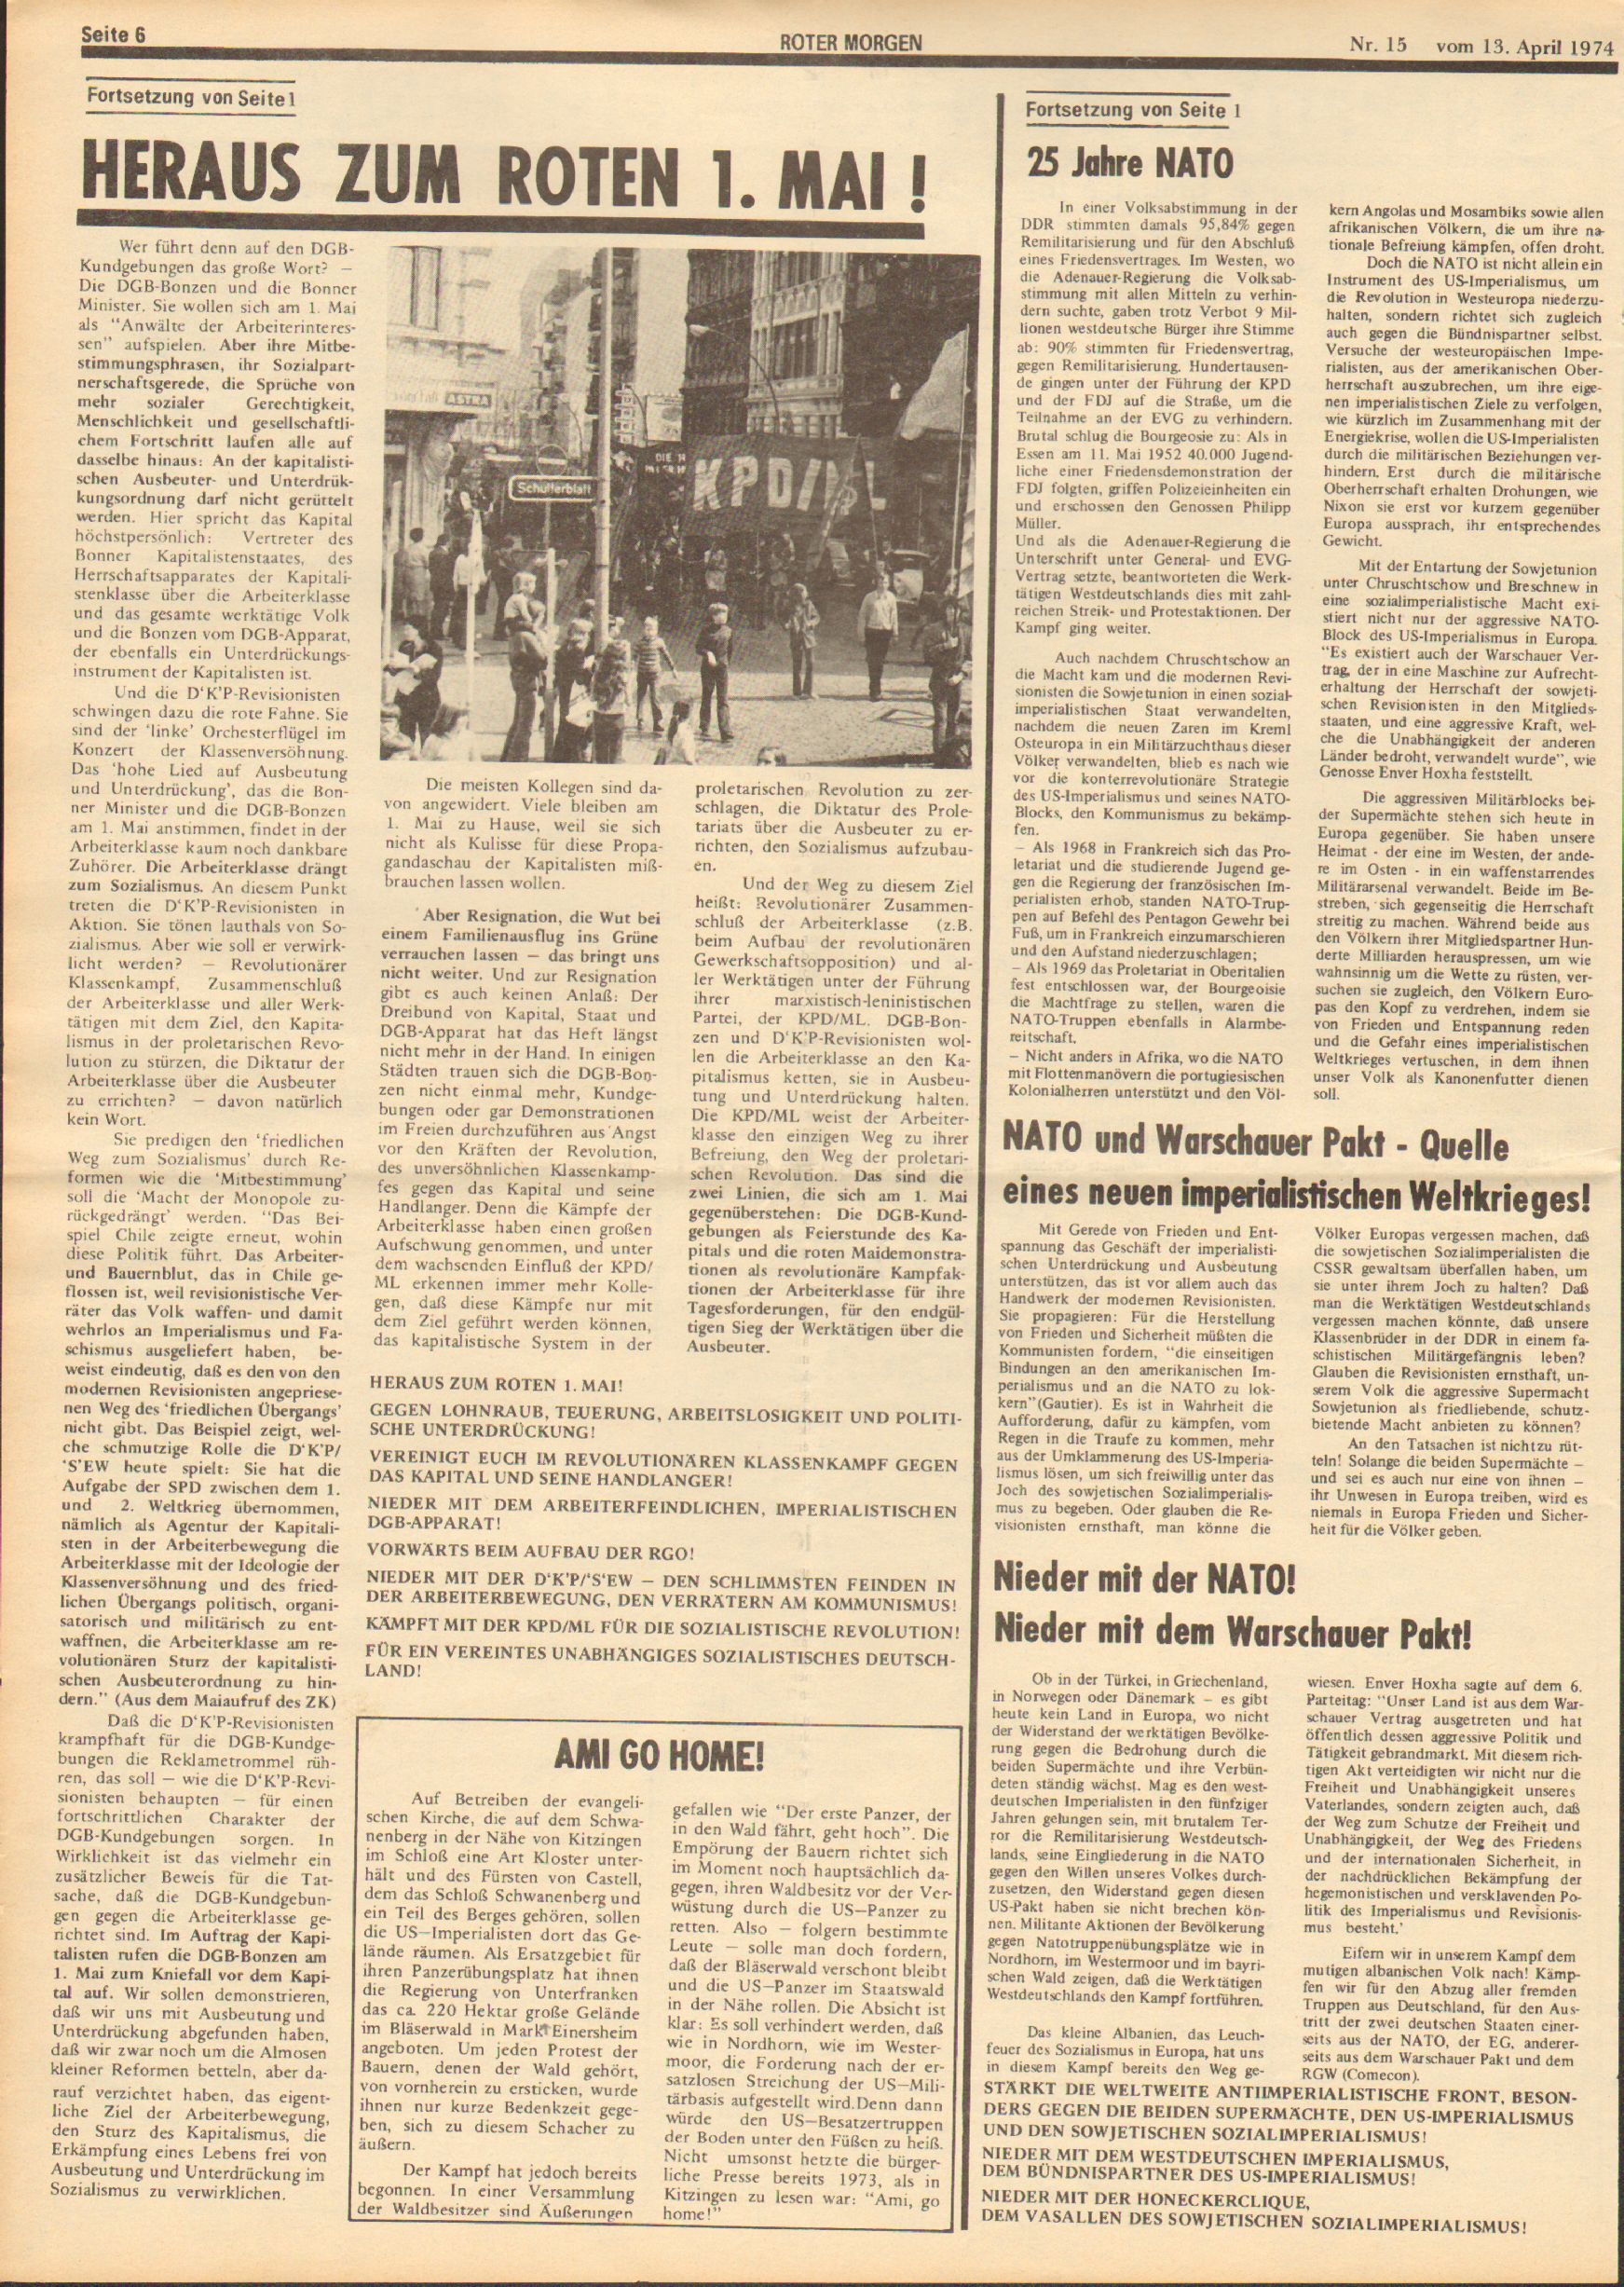 Roter Morgen, 8. Jg., 13. April 1974, Nr. 15, Seite 6